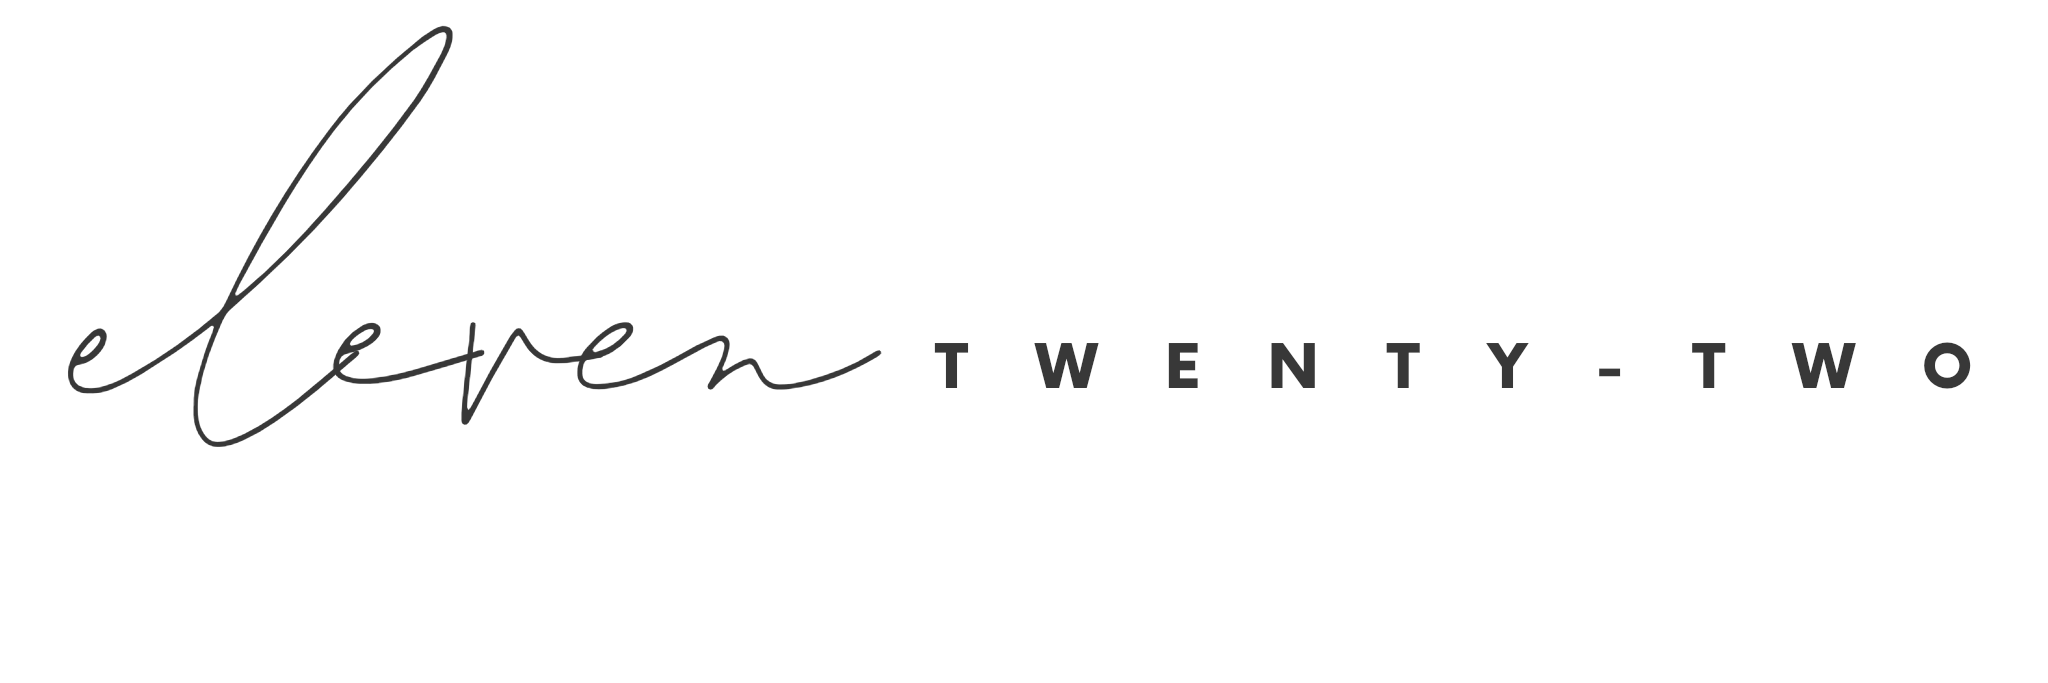 Eleven Twenty-Two Co.